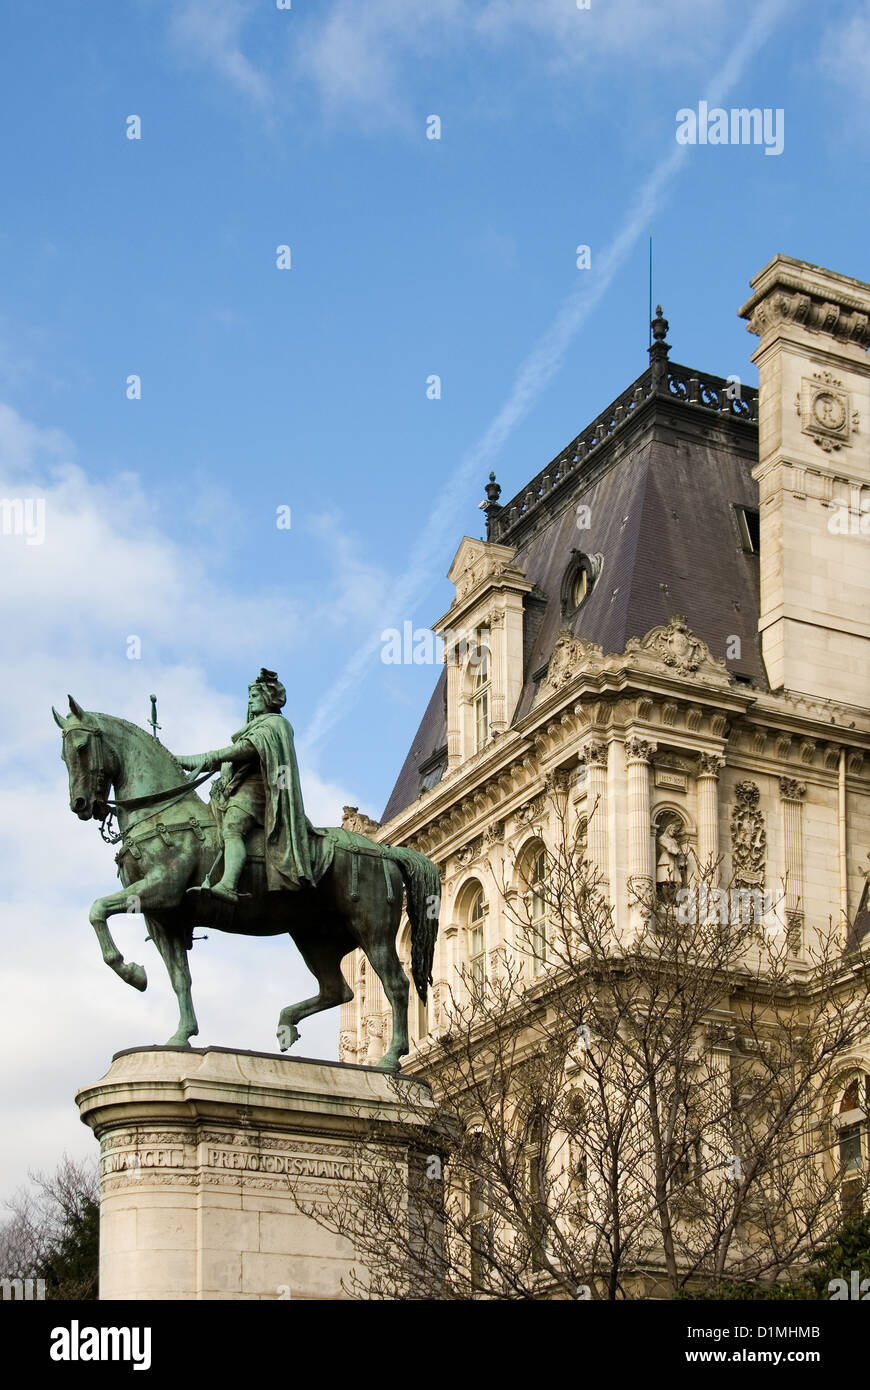 The bronze statue of Etienne Marcel proudly standing beside the Hotel de Ville, Paris, France Stock Photo